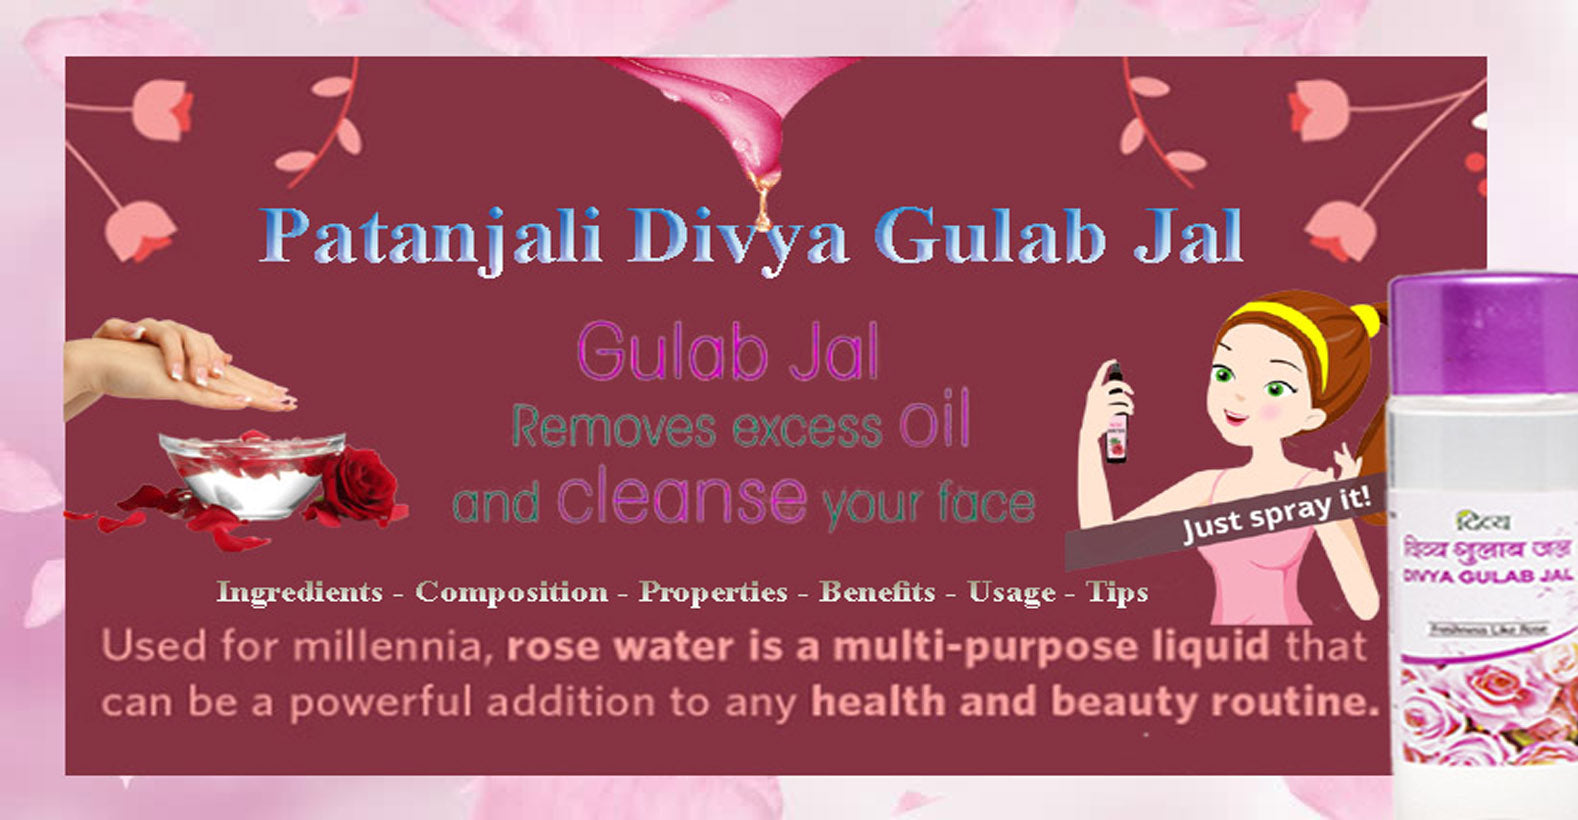 Patanjali Divya Gulab Jal - Ingredients, Composition, Properties, Benefits, Usage, Tips